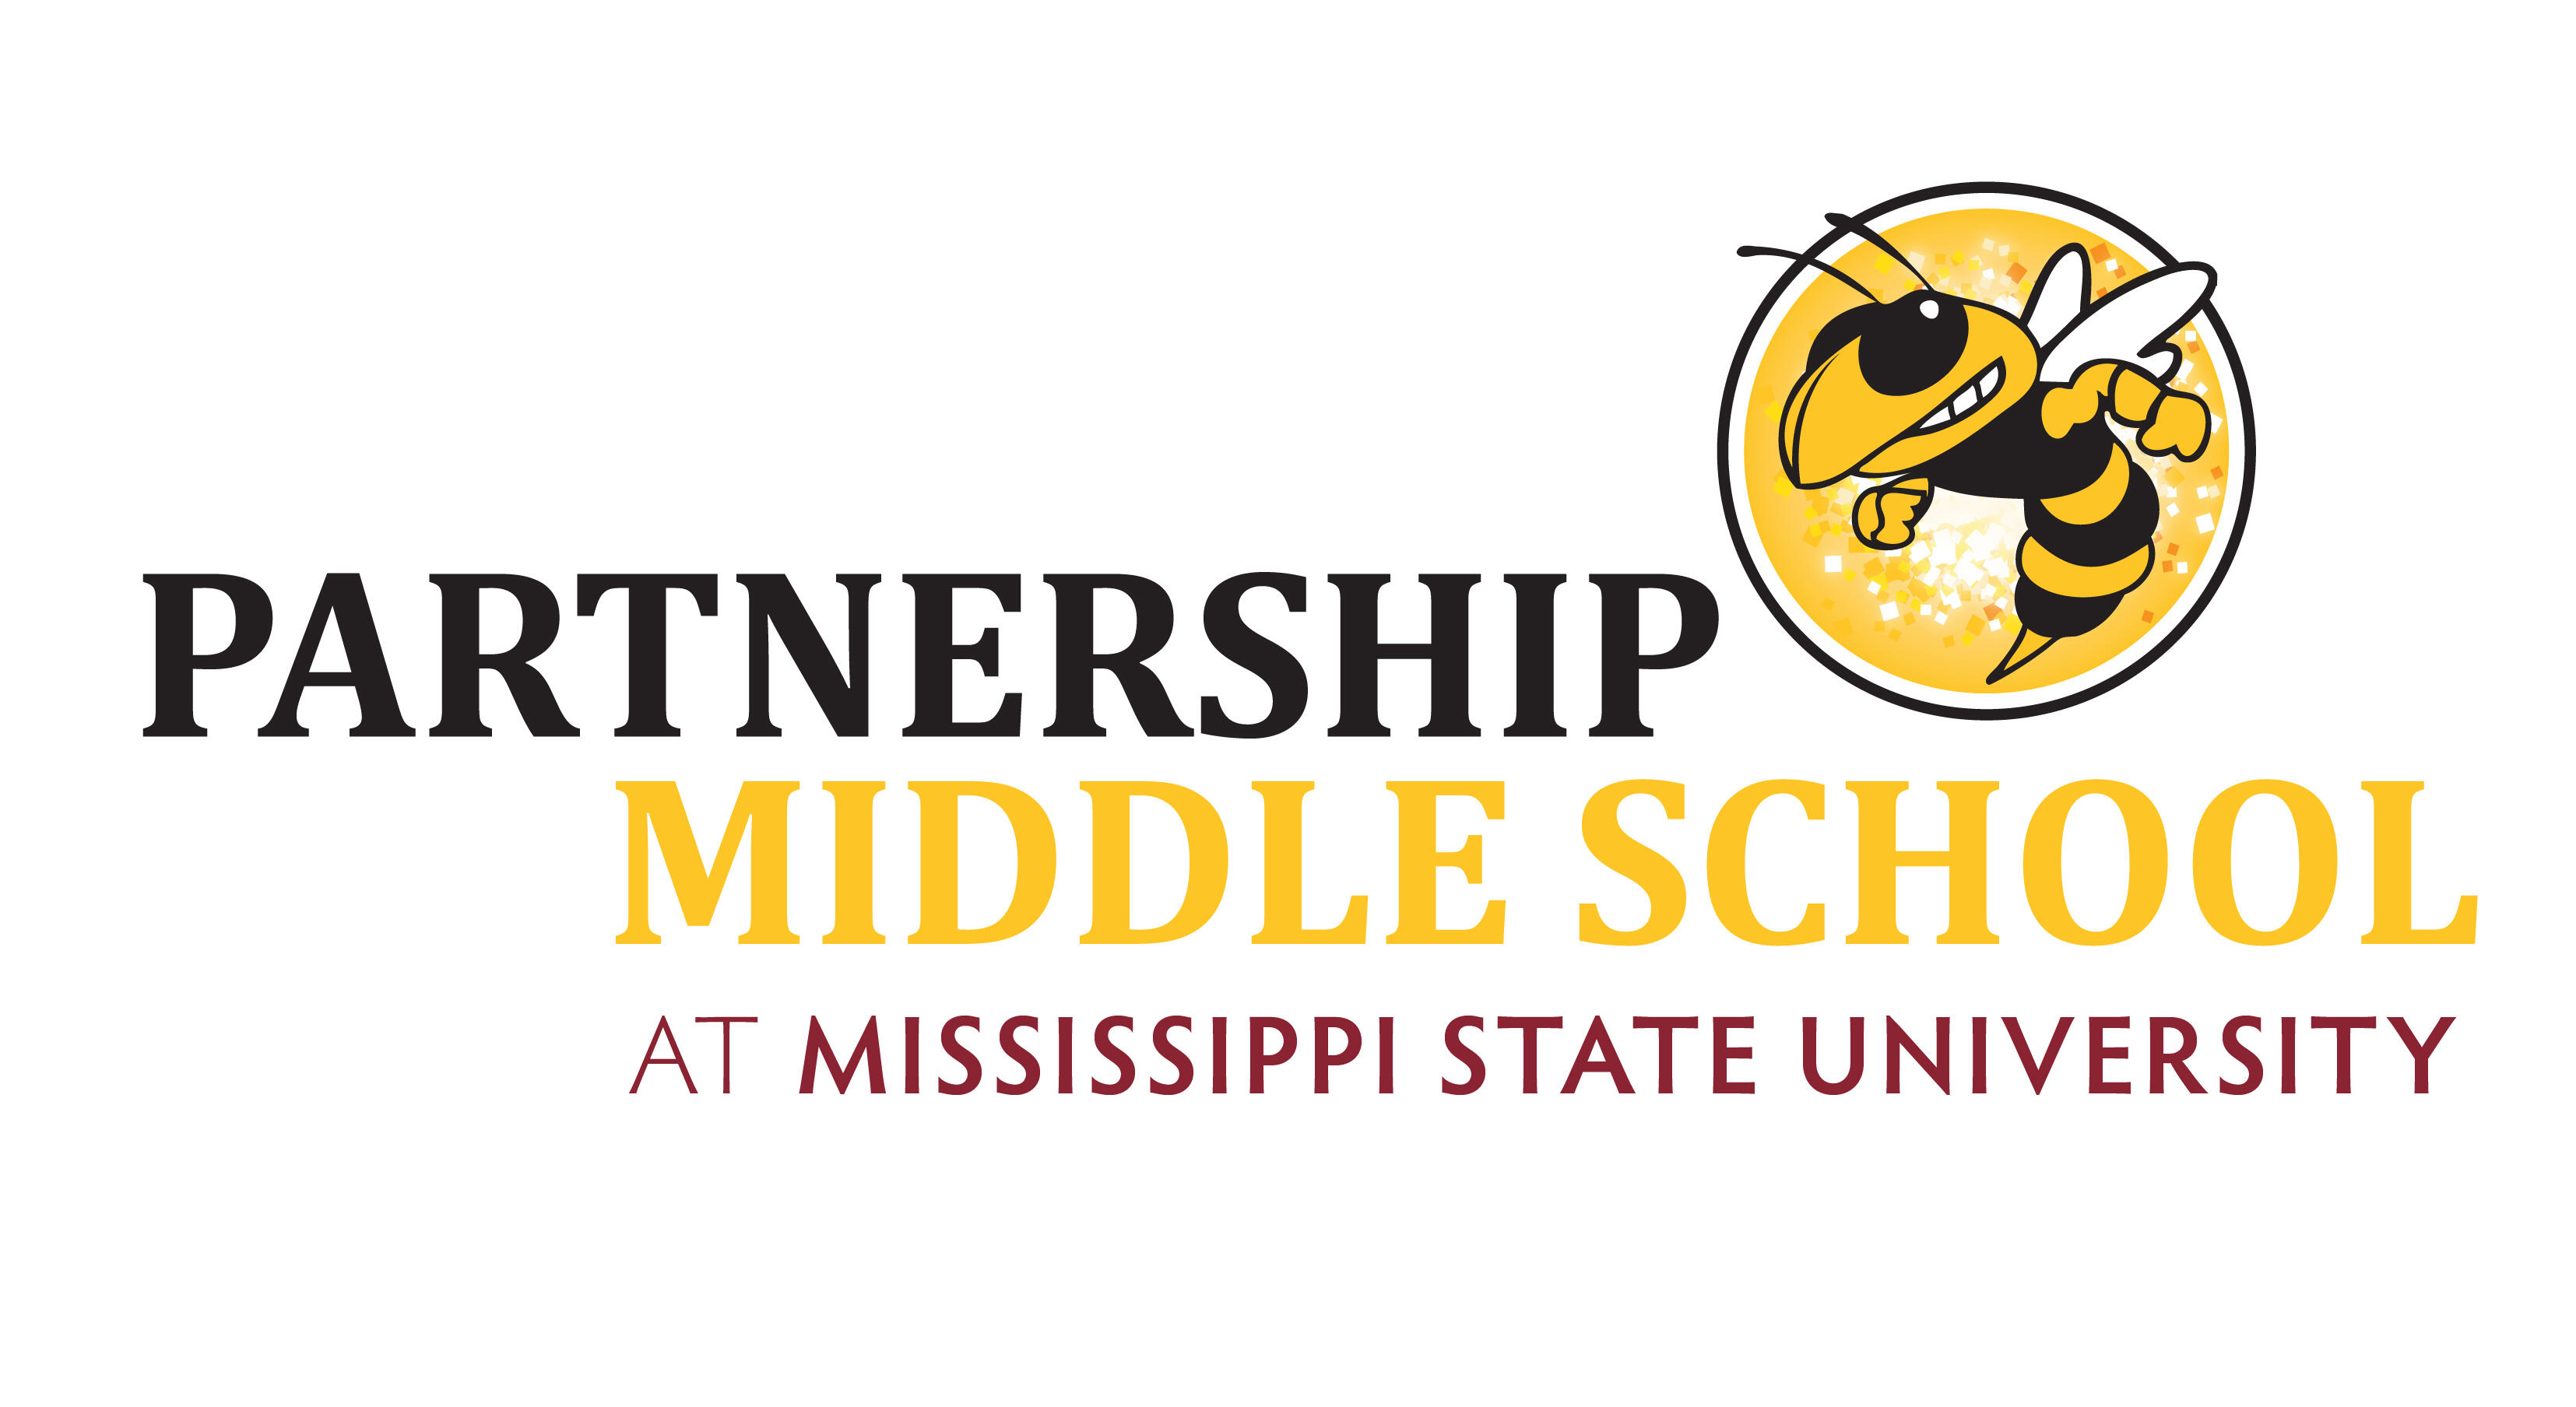 Partnership Middle School logo